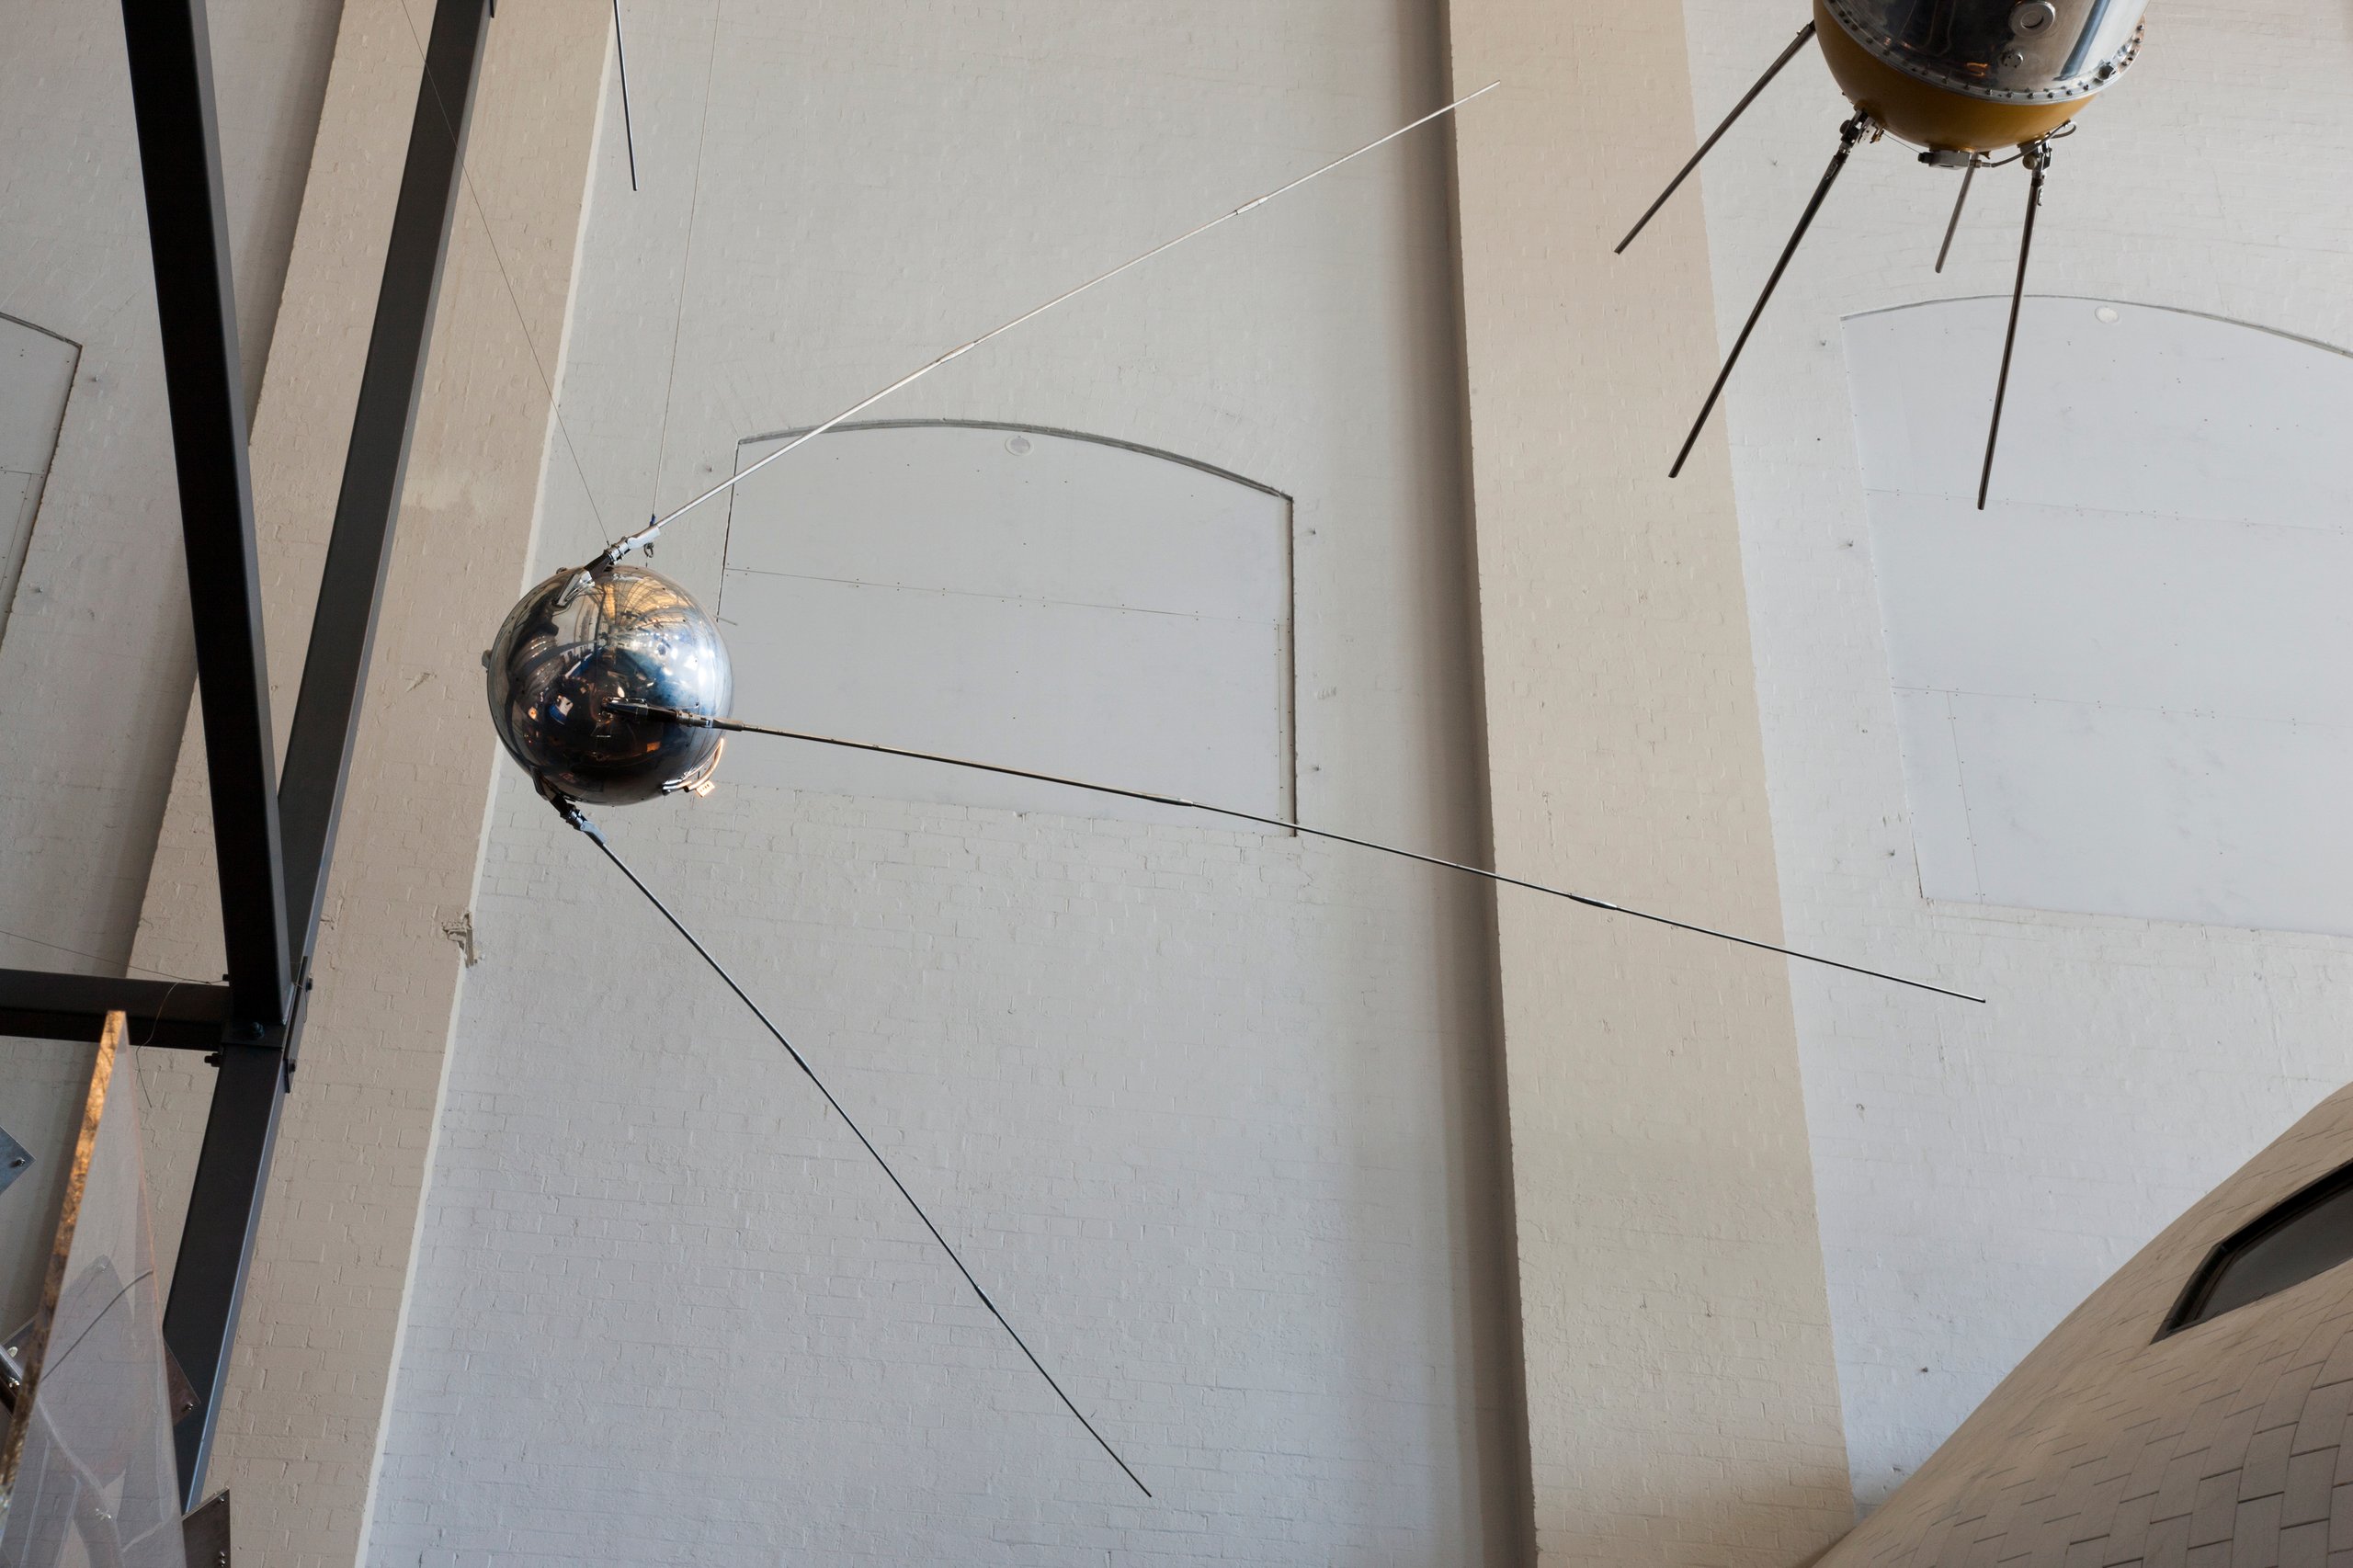 Replica of the Sputnik-1 satellite